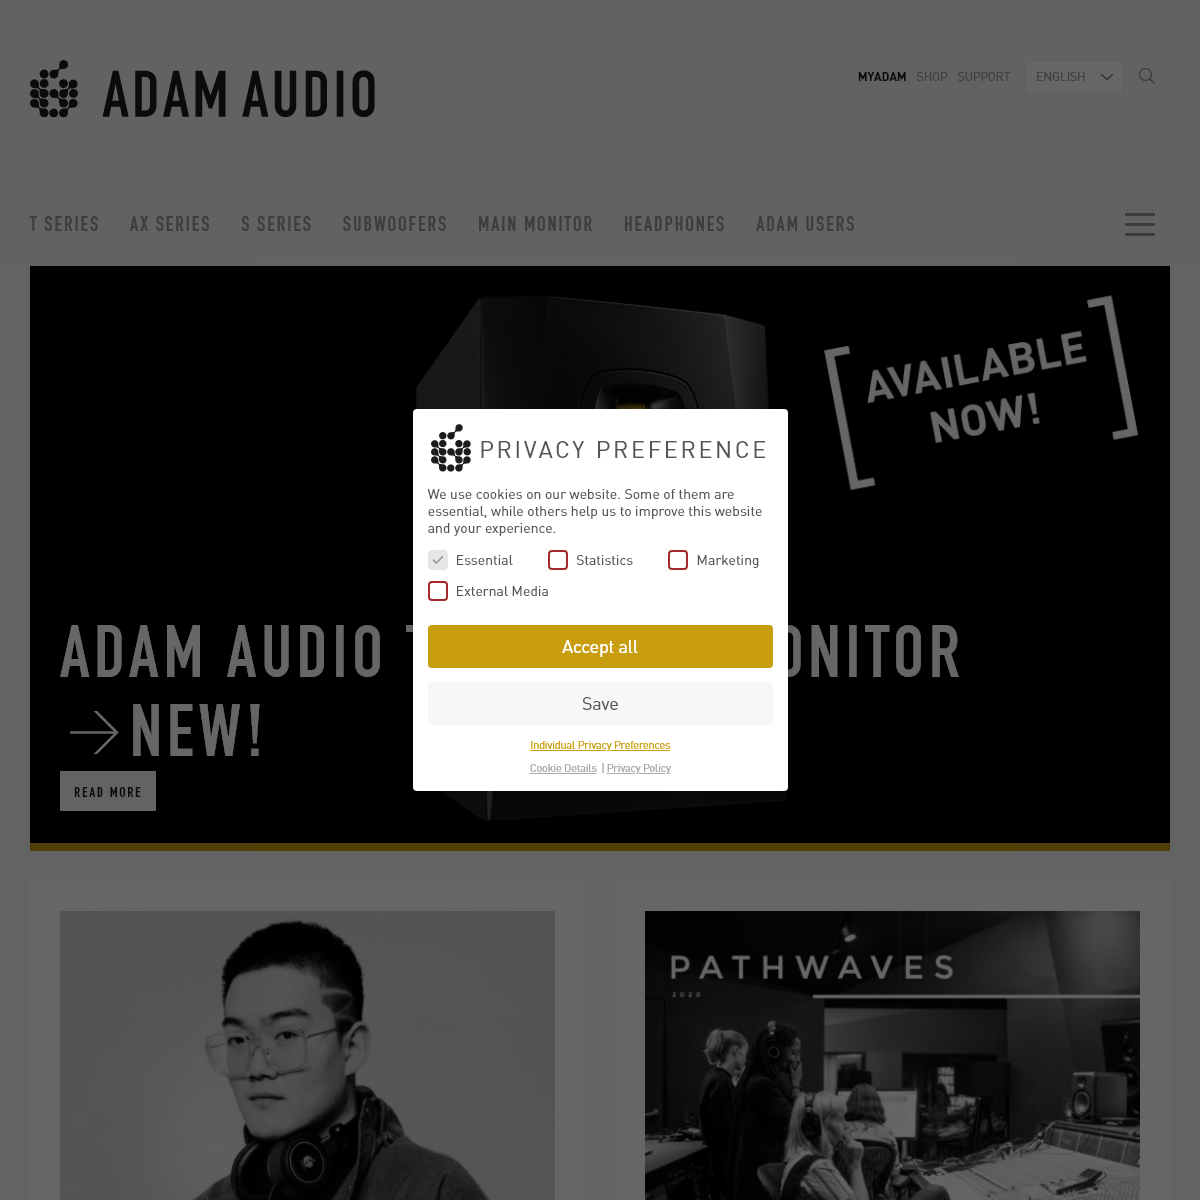 A complete backup of adam-audio.com